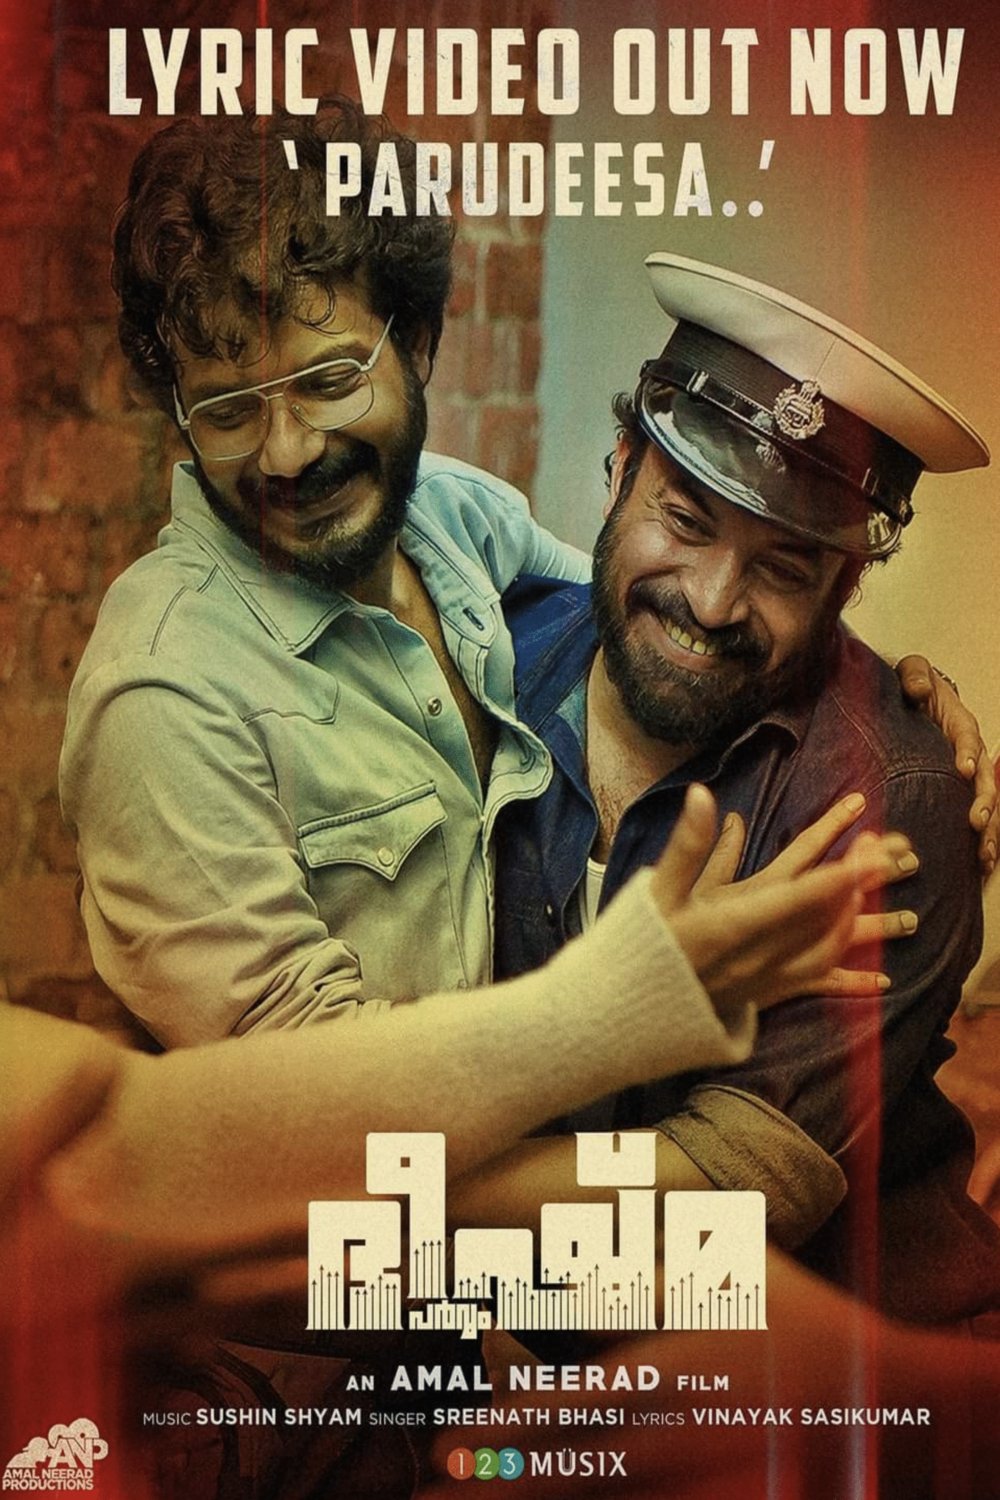 Malayalam poster of the movie Bheeshmaparvam